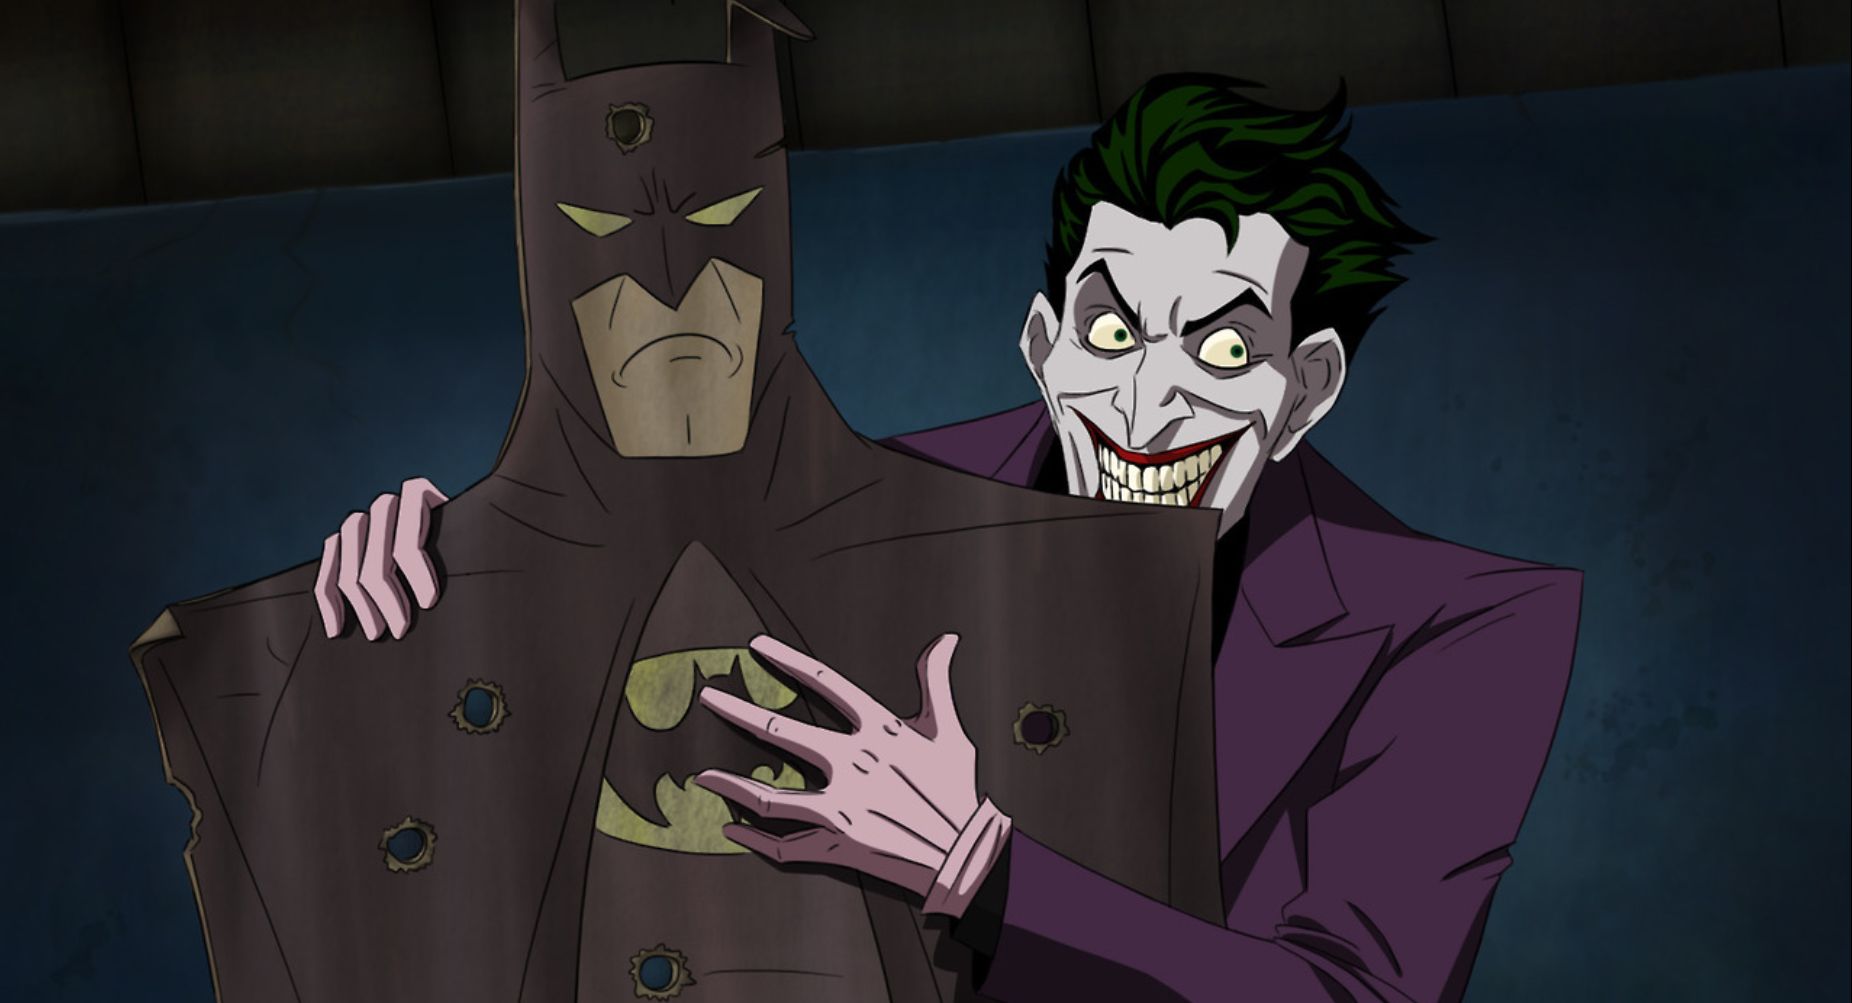 Скачать обои бесплатно Джокер, Комиксы, Бэтмен, Комиксы Dc картинка на рабочий стол ПК